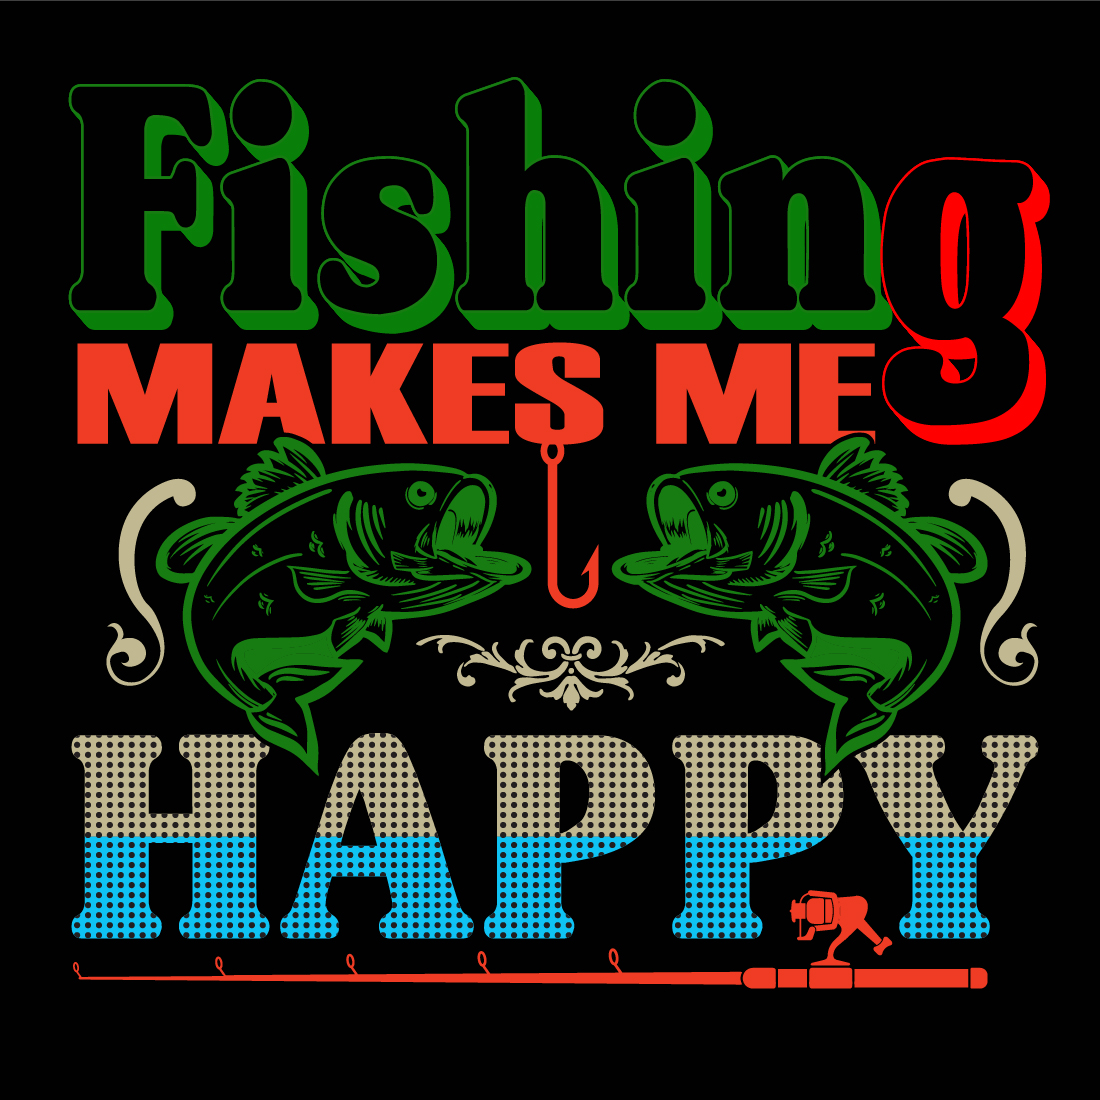 fishing makes me happy t shirt design pre 1 181